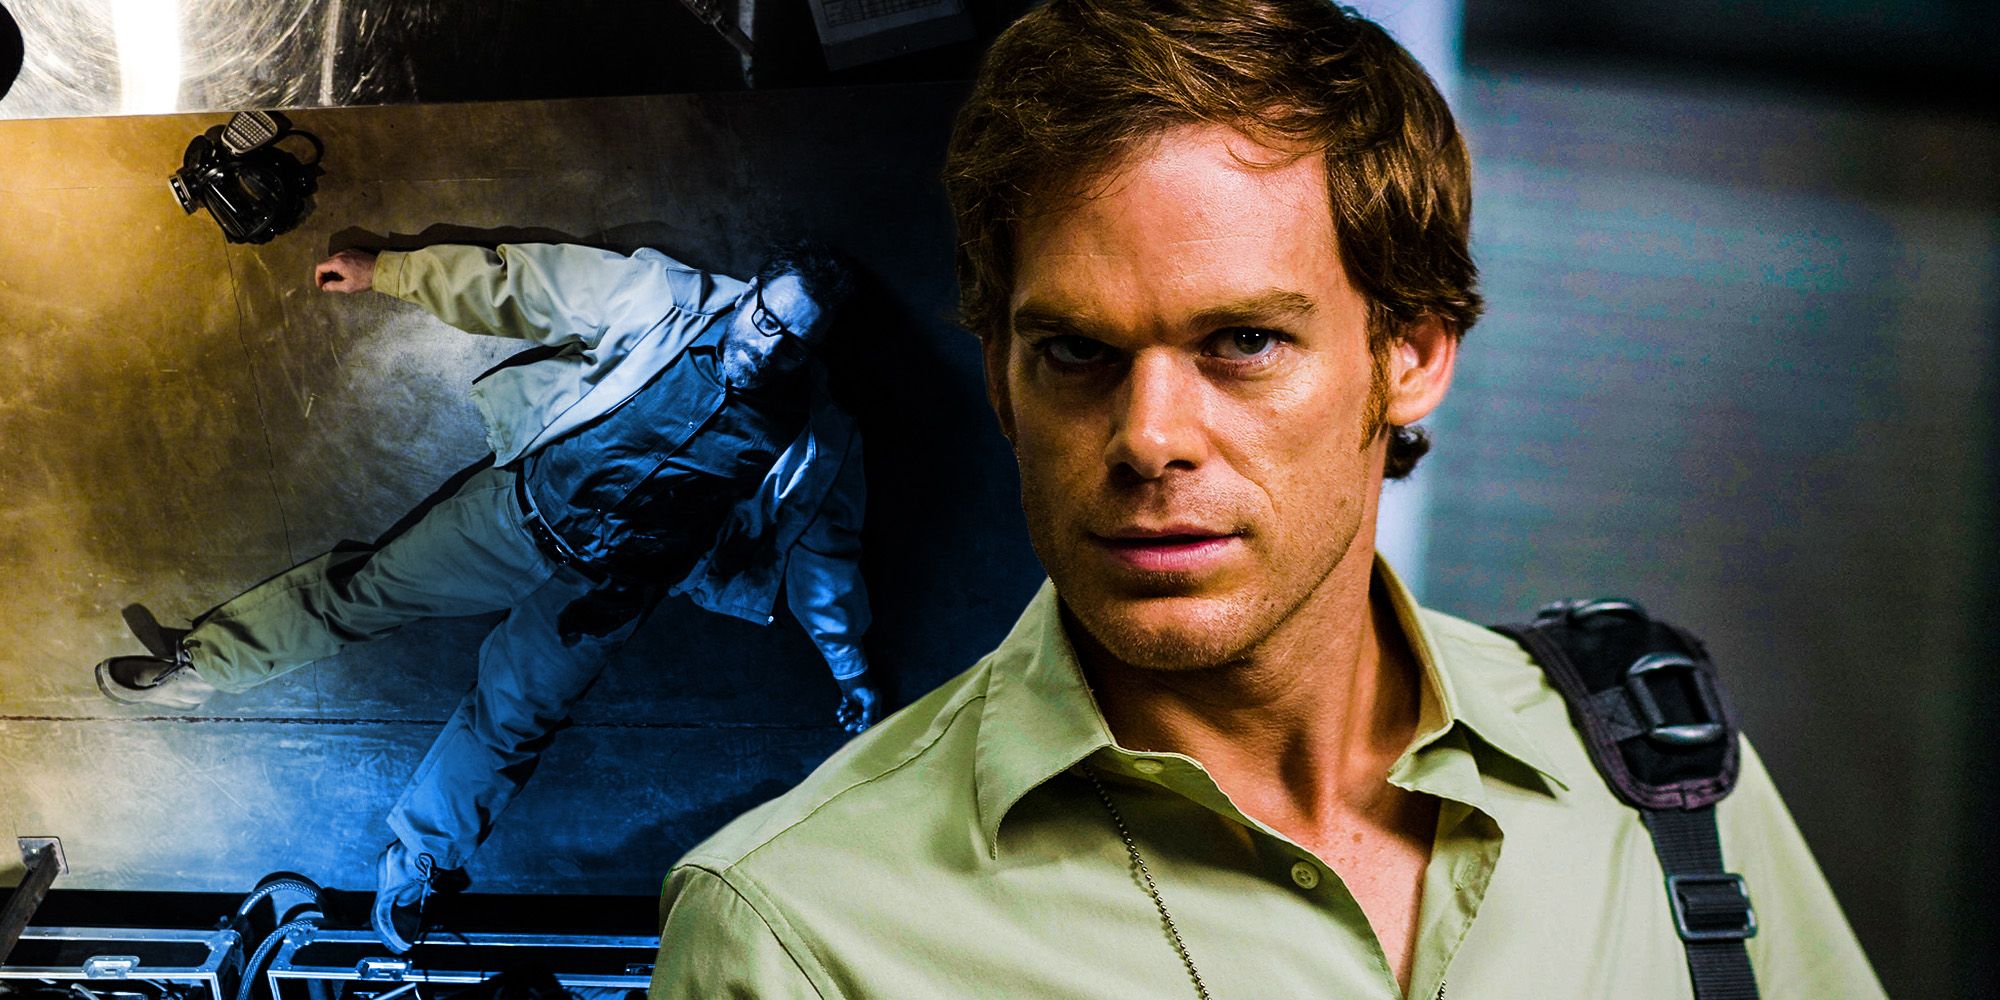 Why Dexters Reboot Deserves A Tragic Ending